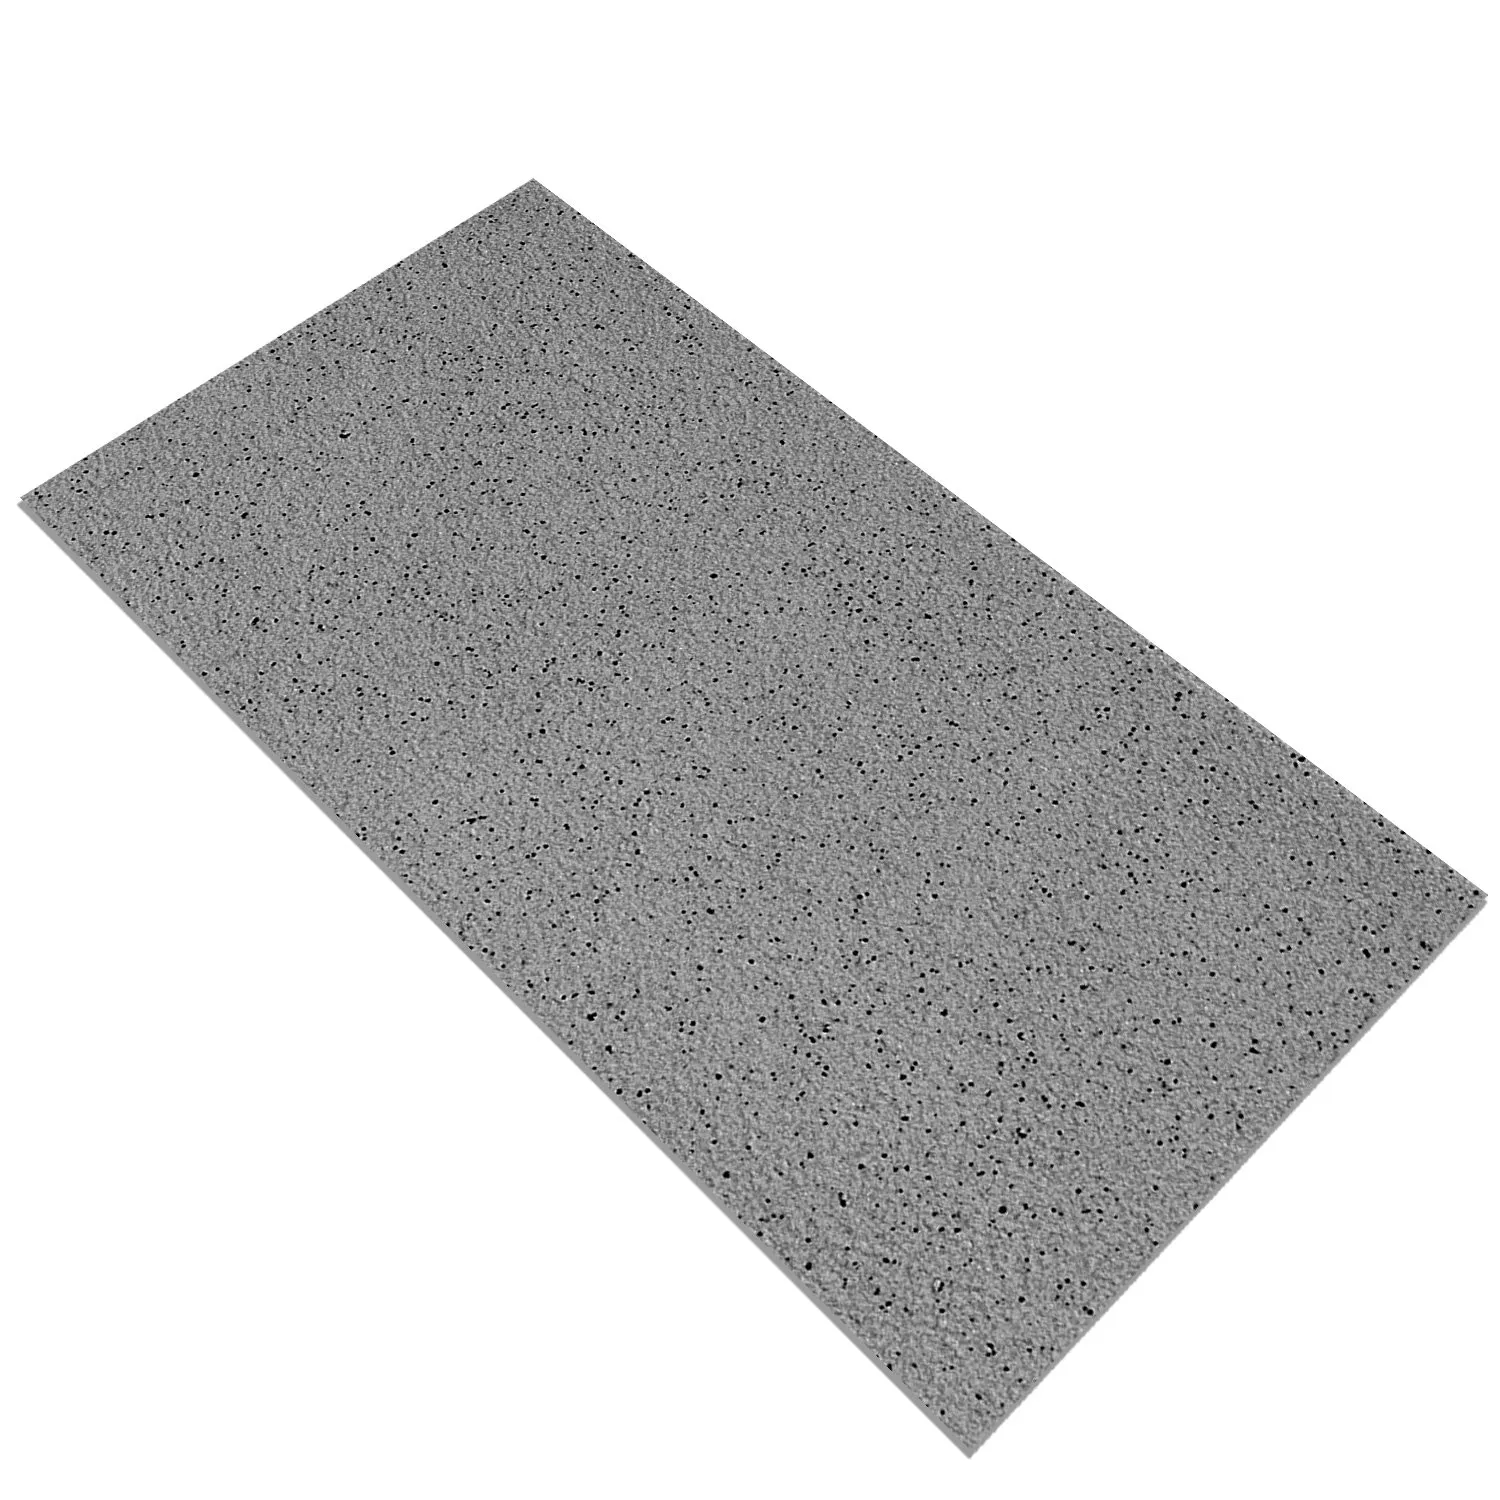 Sample Floor Tiles Fine Grain R10/A Anthracite 30x60cm